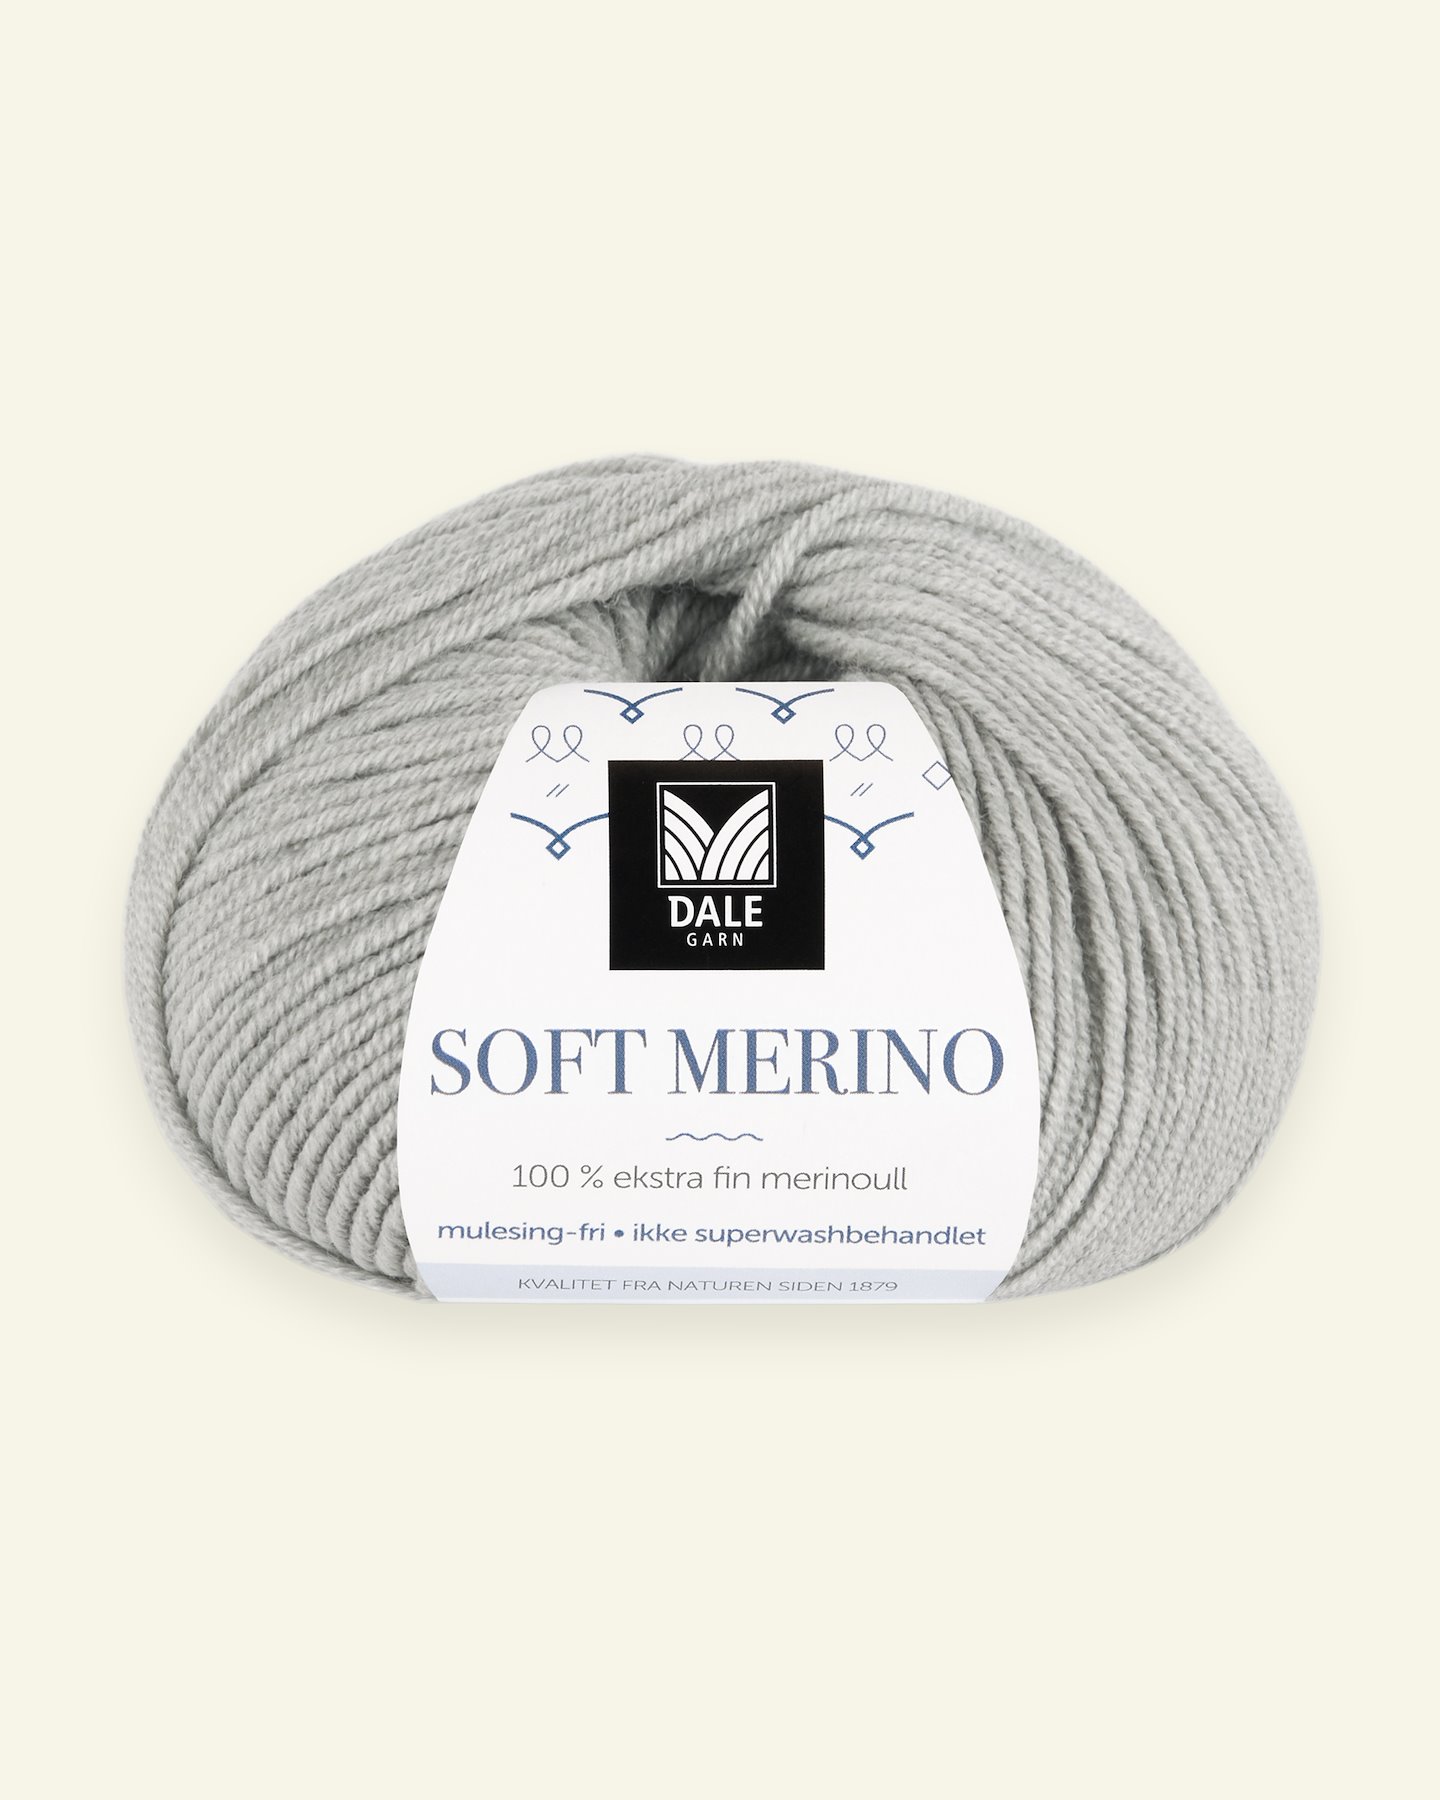 Dale Garn, 100% Extrafeine Merino-Wolle "Soft Merino", hellgrau mel. (3002) 90000324_pack